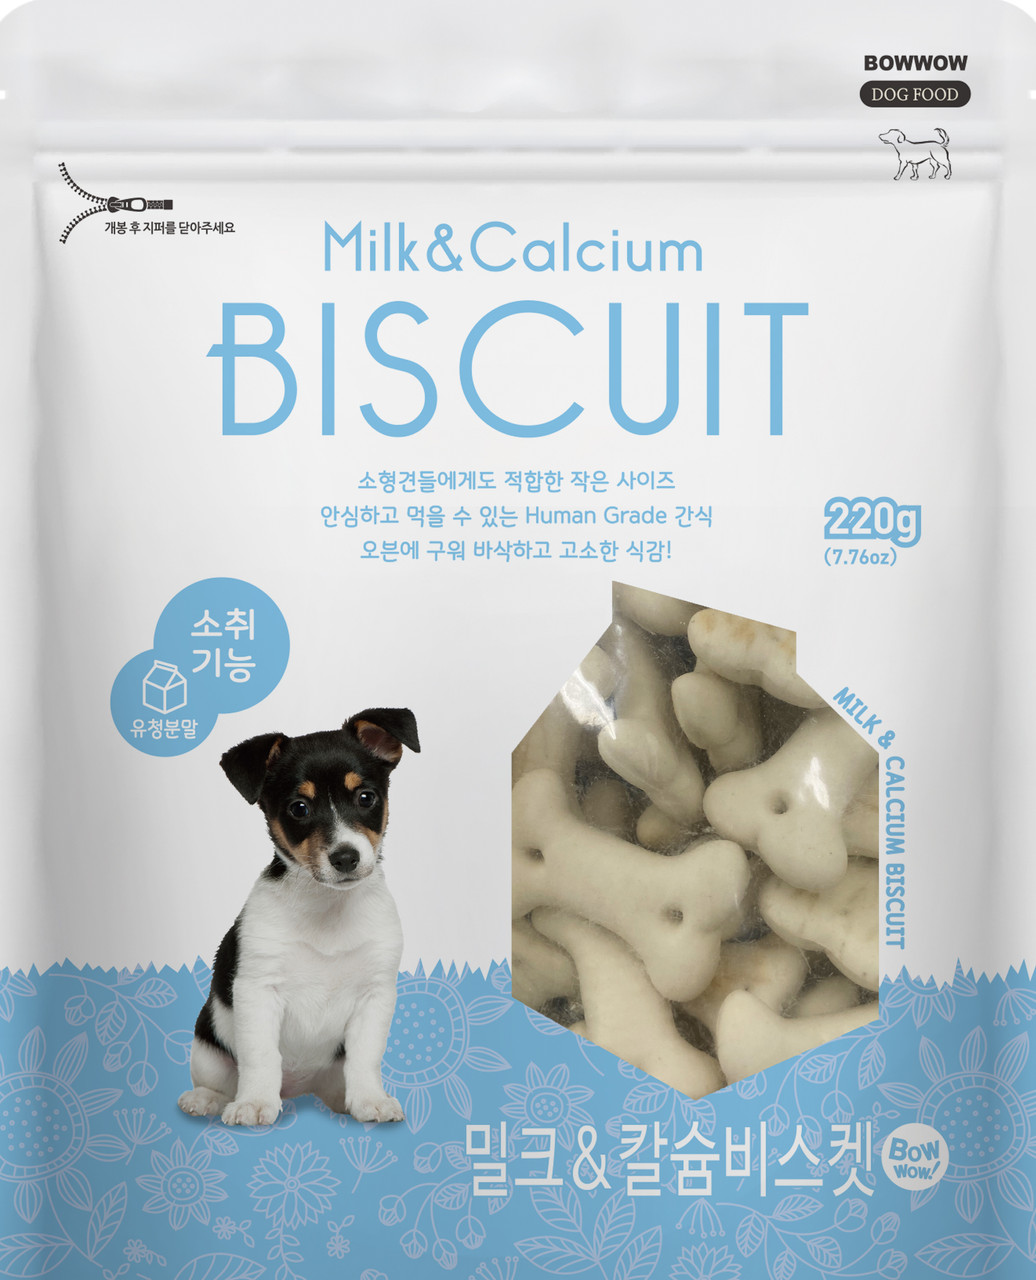 Bow Wow Milk & Calcium Biscuit (220g)